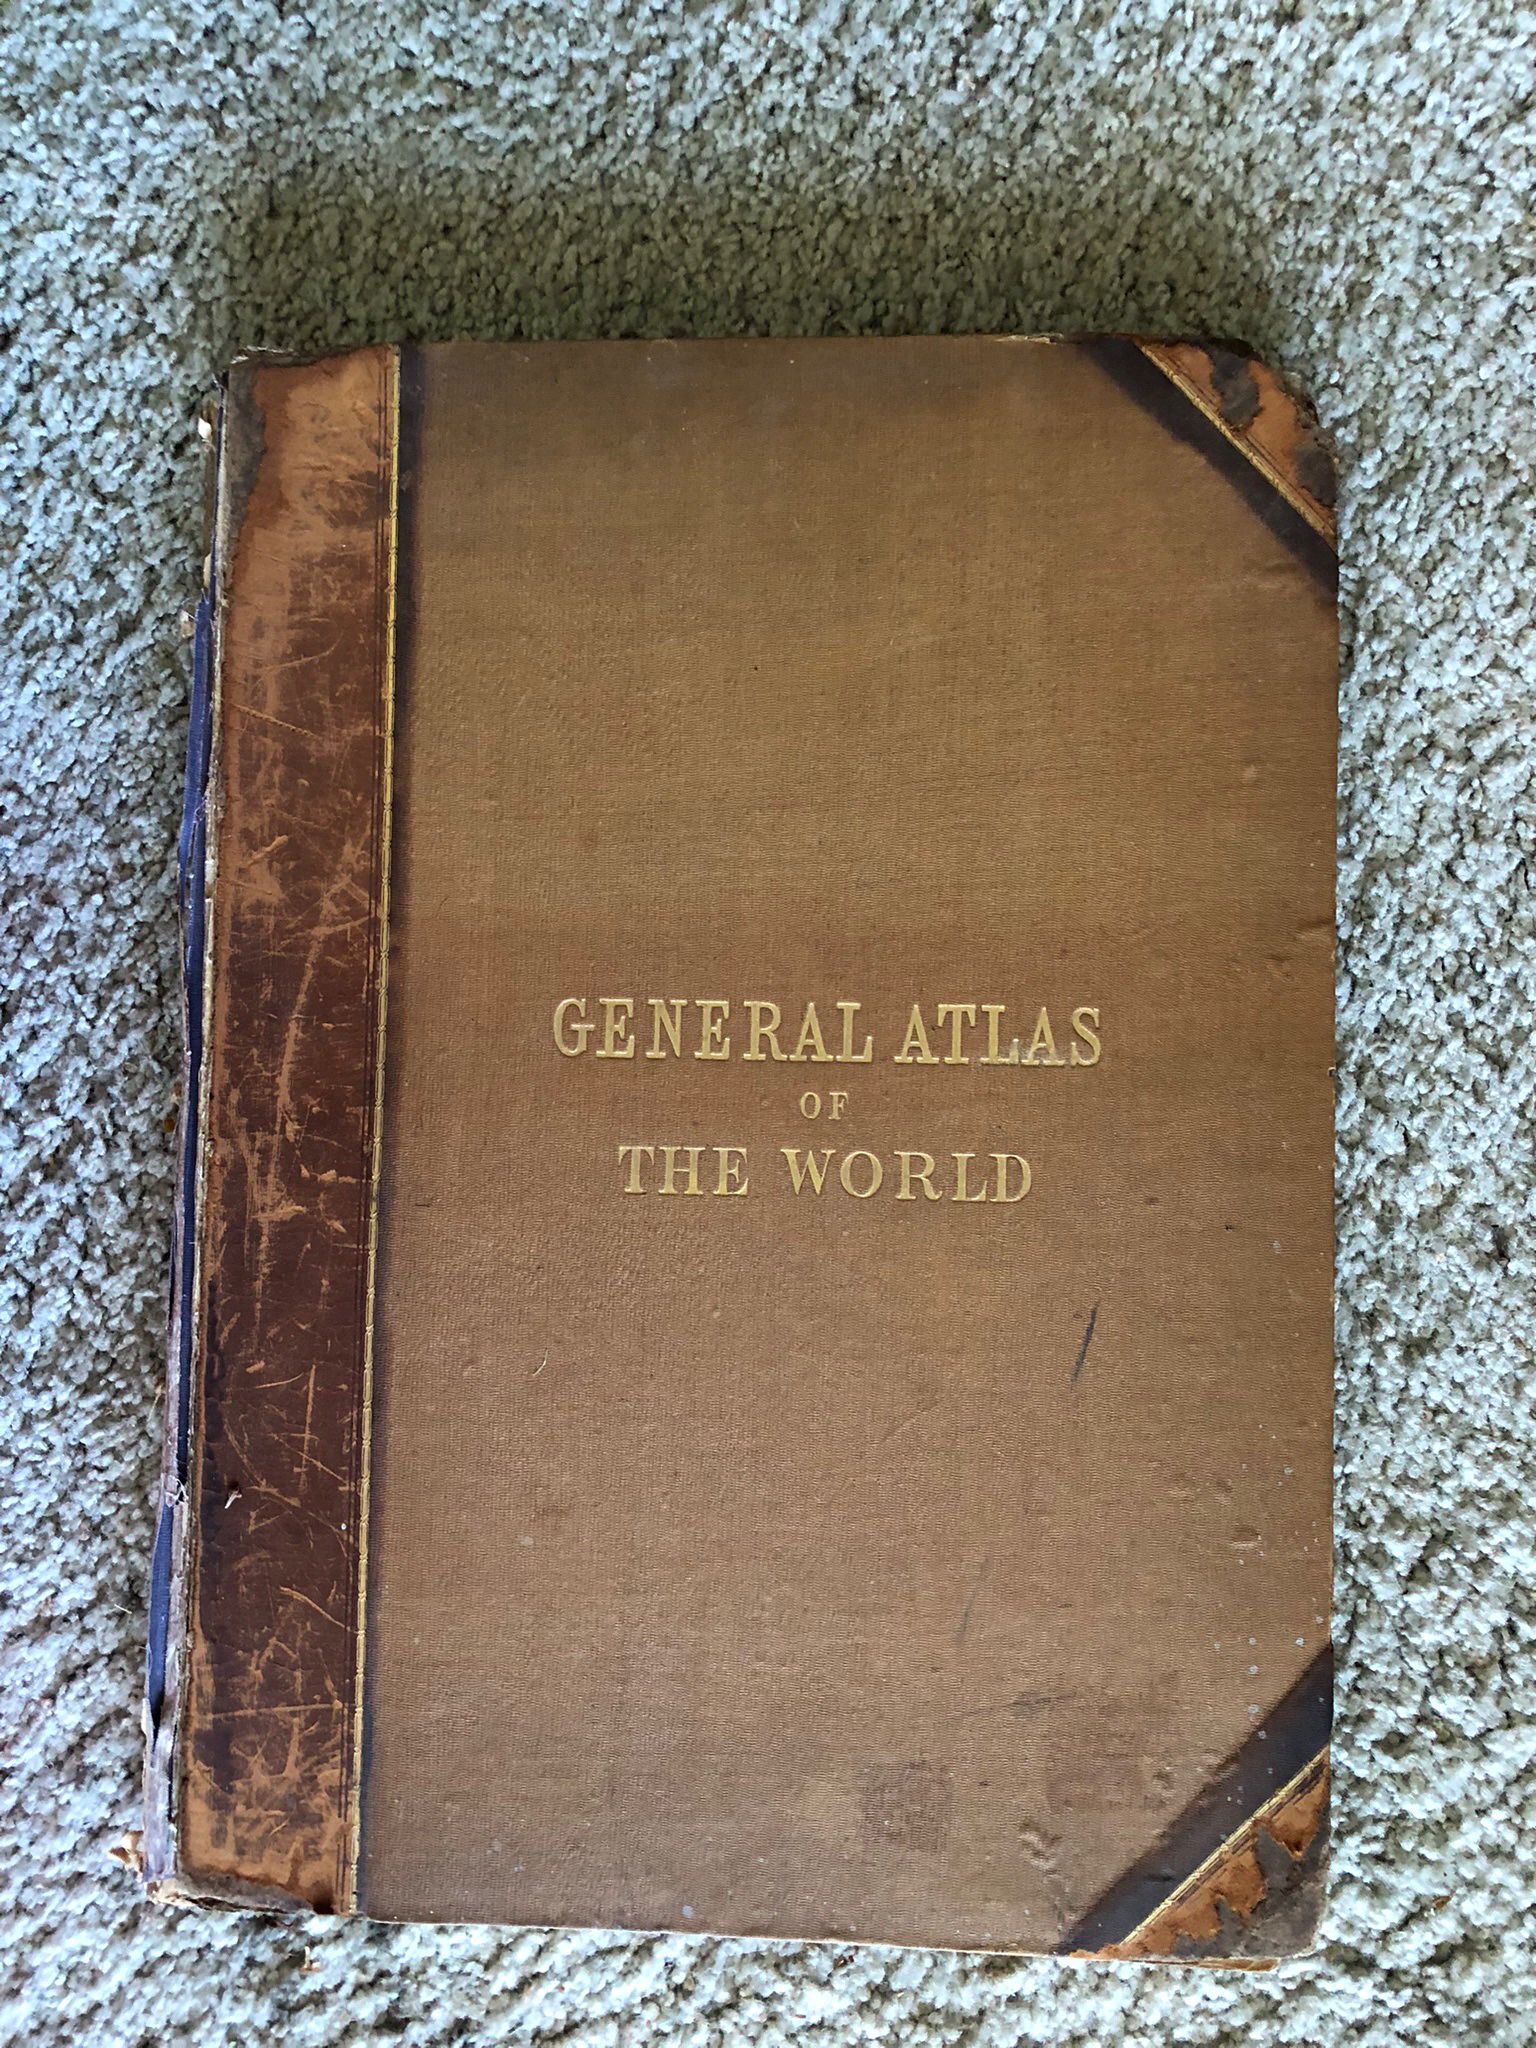 General Atlas Of The World, 1859, Adam and Charles Black, Edinburgh.